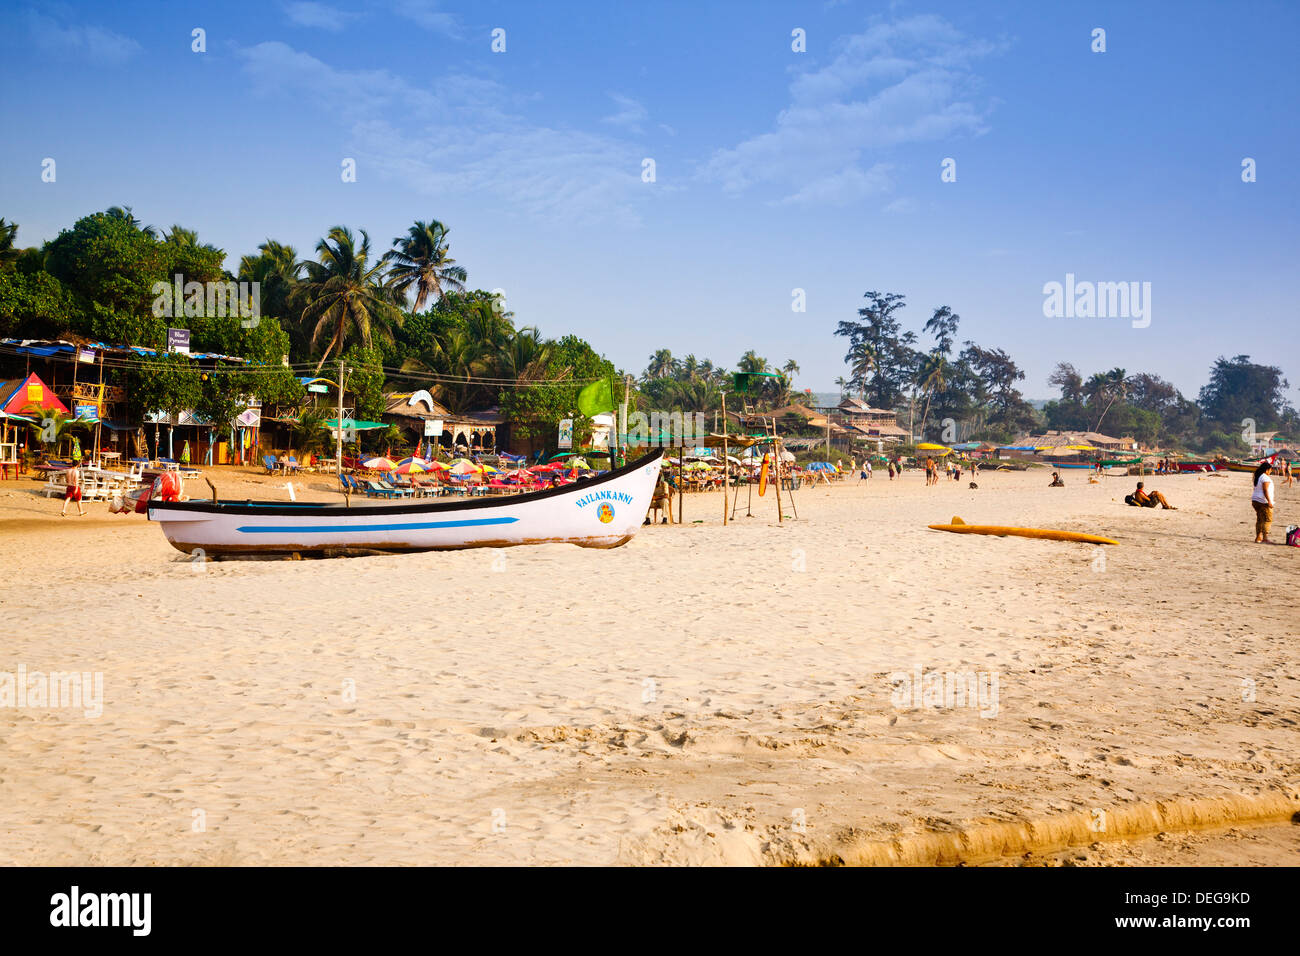 Boat with tourists on the beach, Panaji, Goa, India Stock Photo